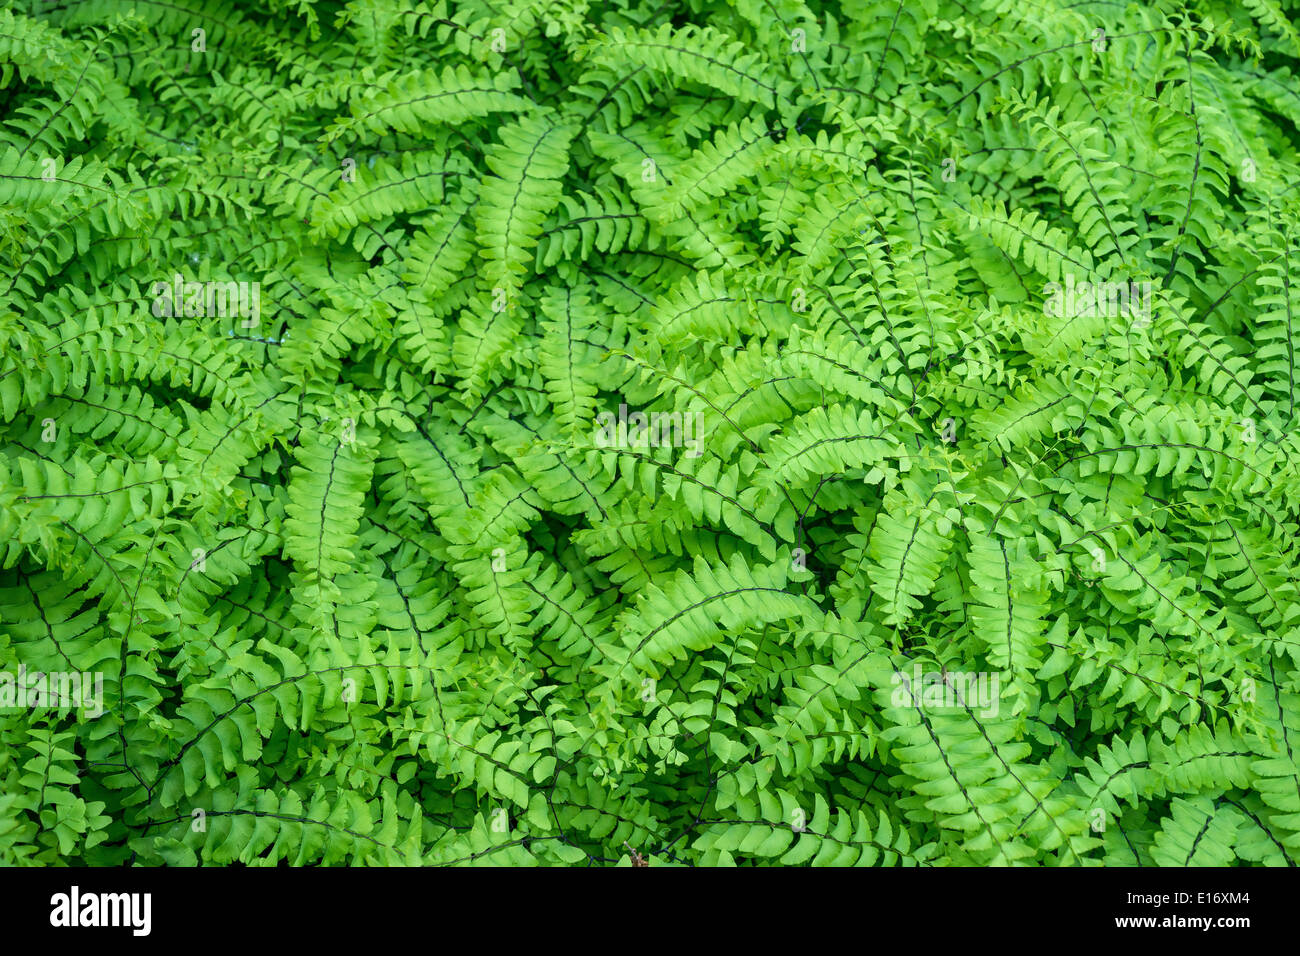 Northern maidenhair fern fresh green spring leaves Adiantum pedatum Stock Photo